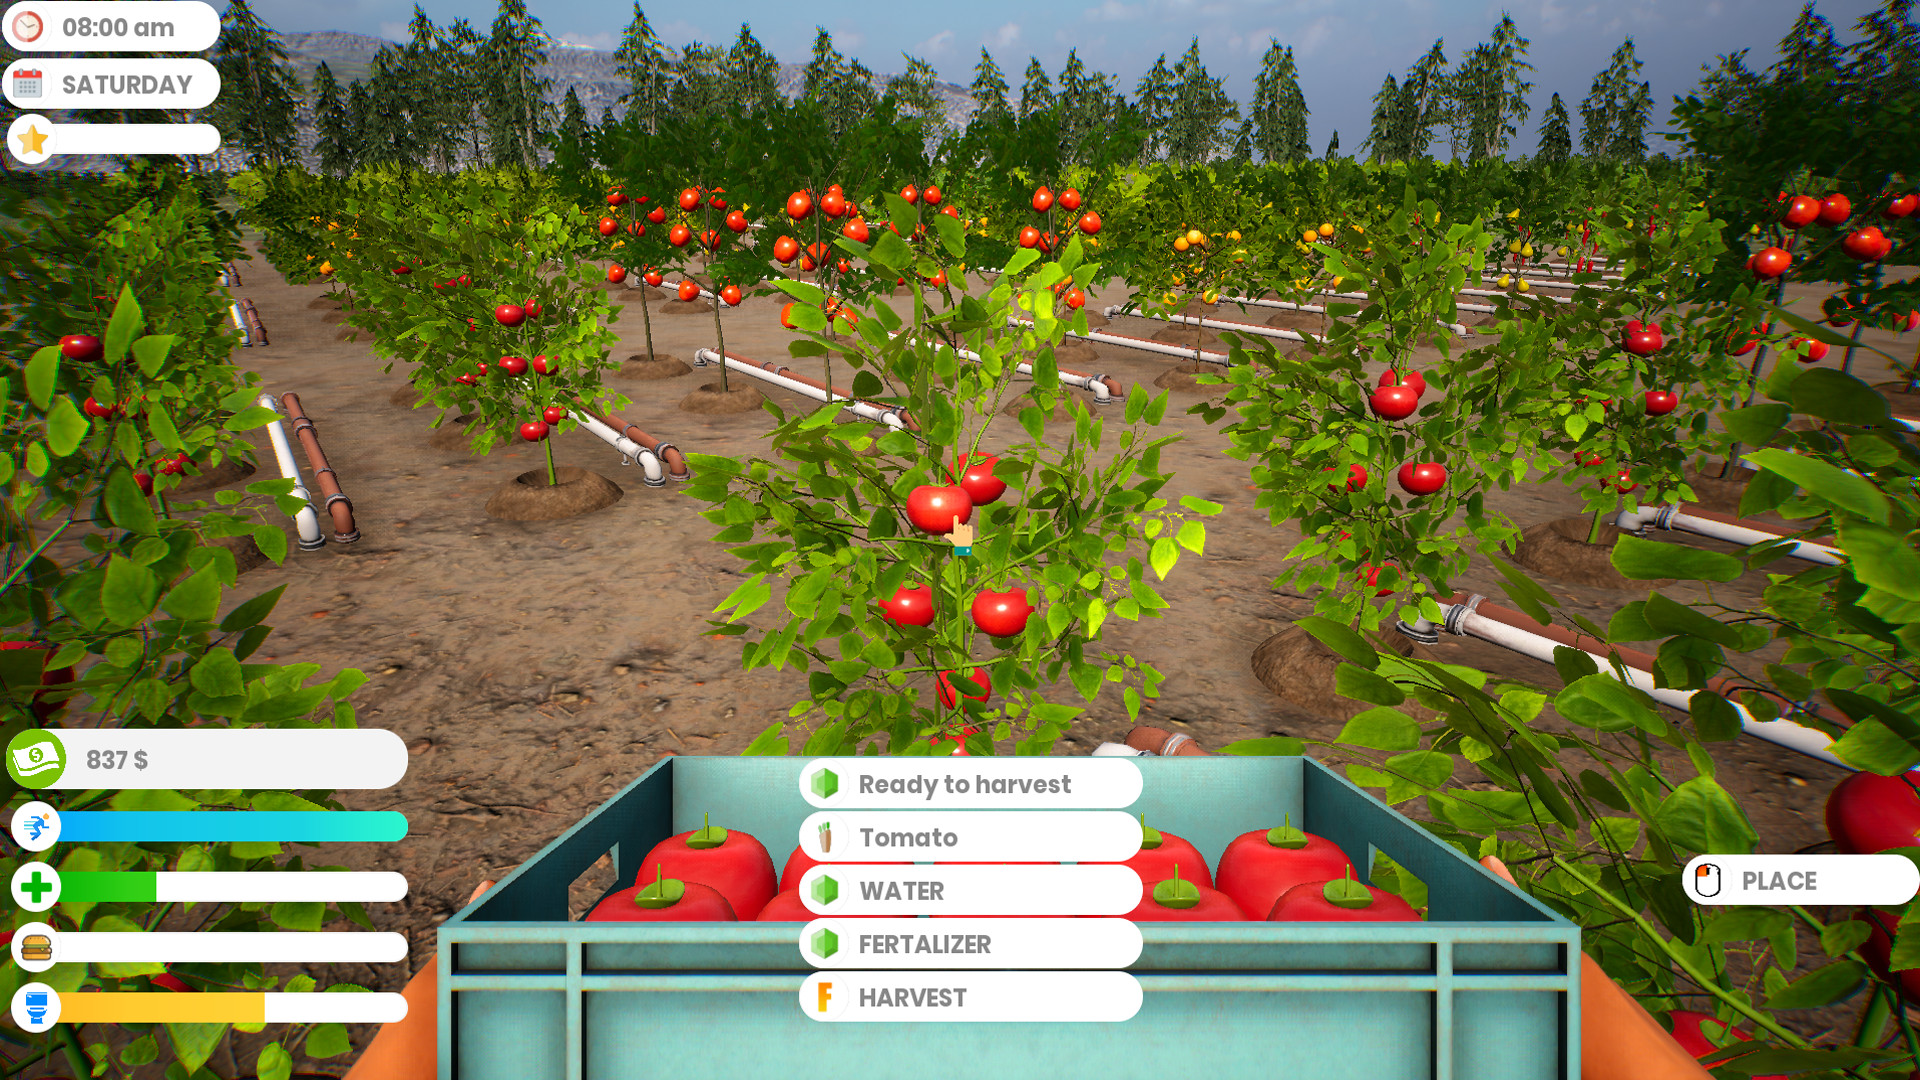 Find the best laptops for Farmer Life Simulator